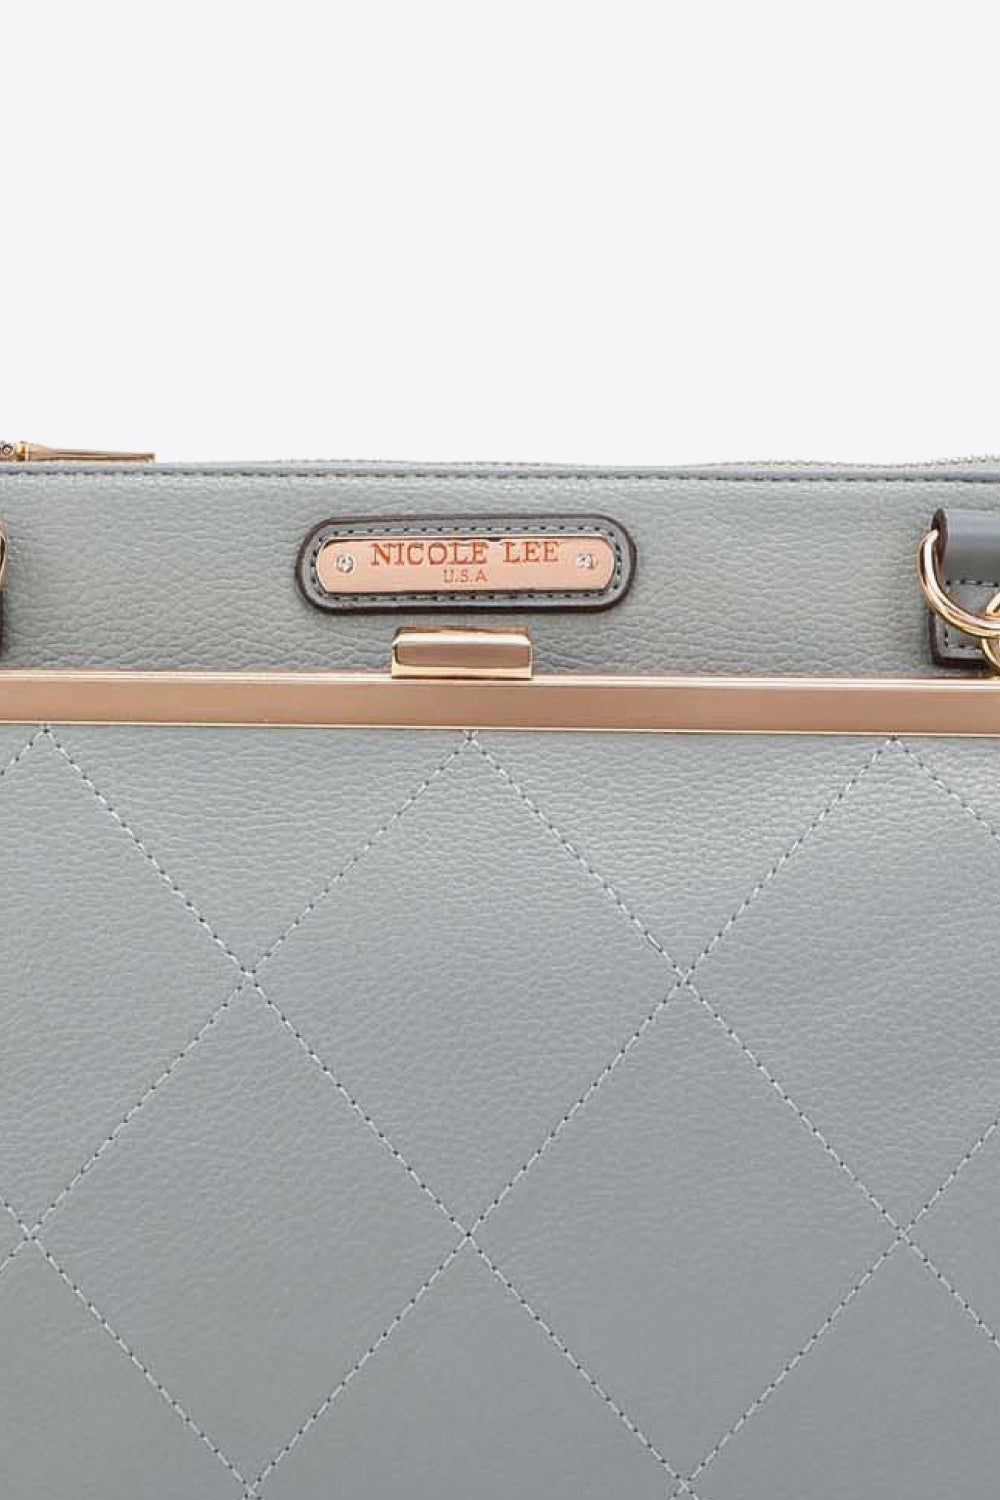 Everyday Essential: Nicole Lee USA Handbag